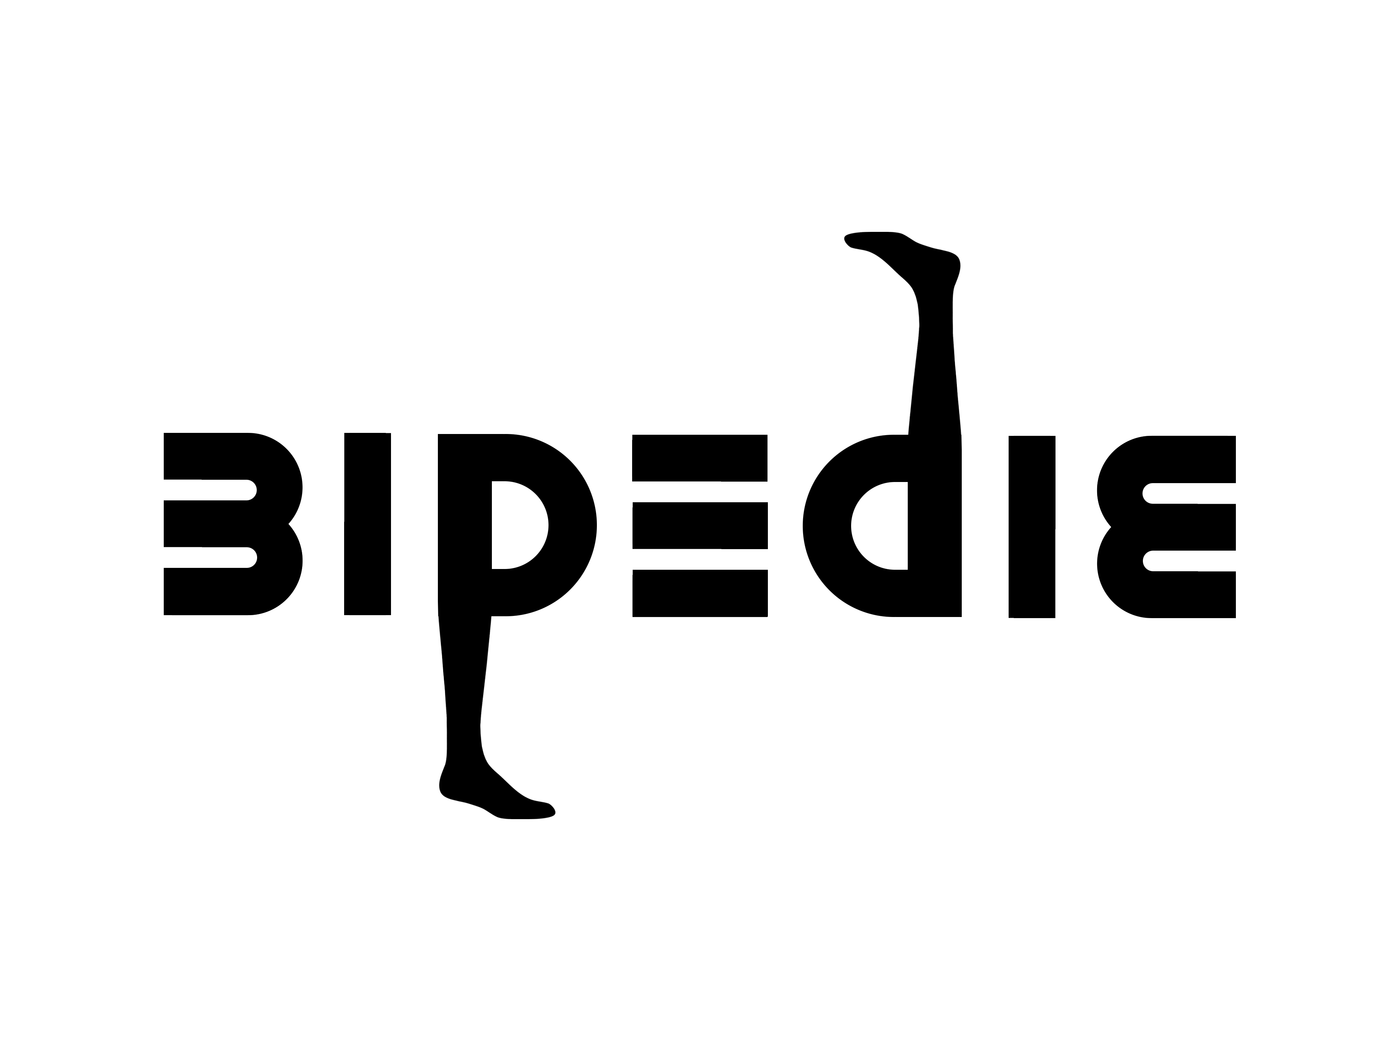 ambigramme Bipedie